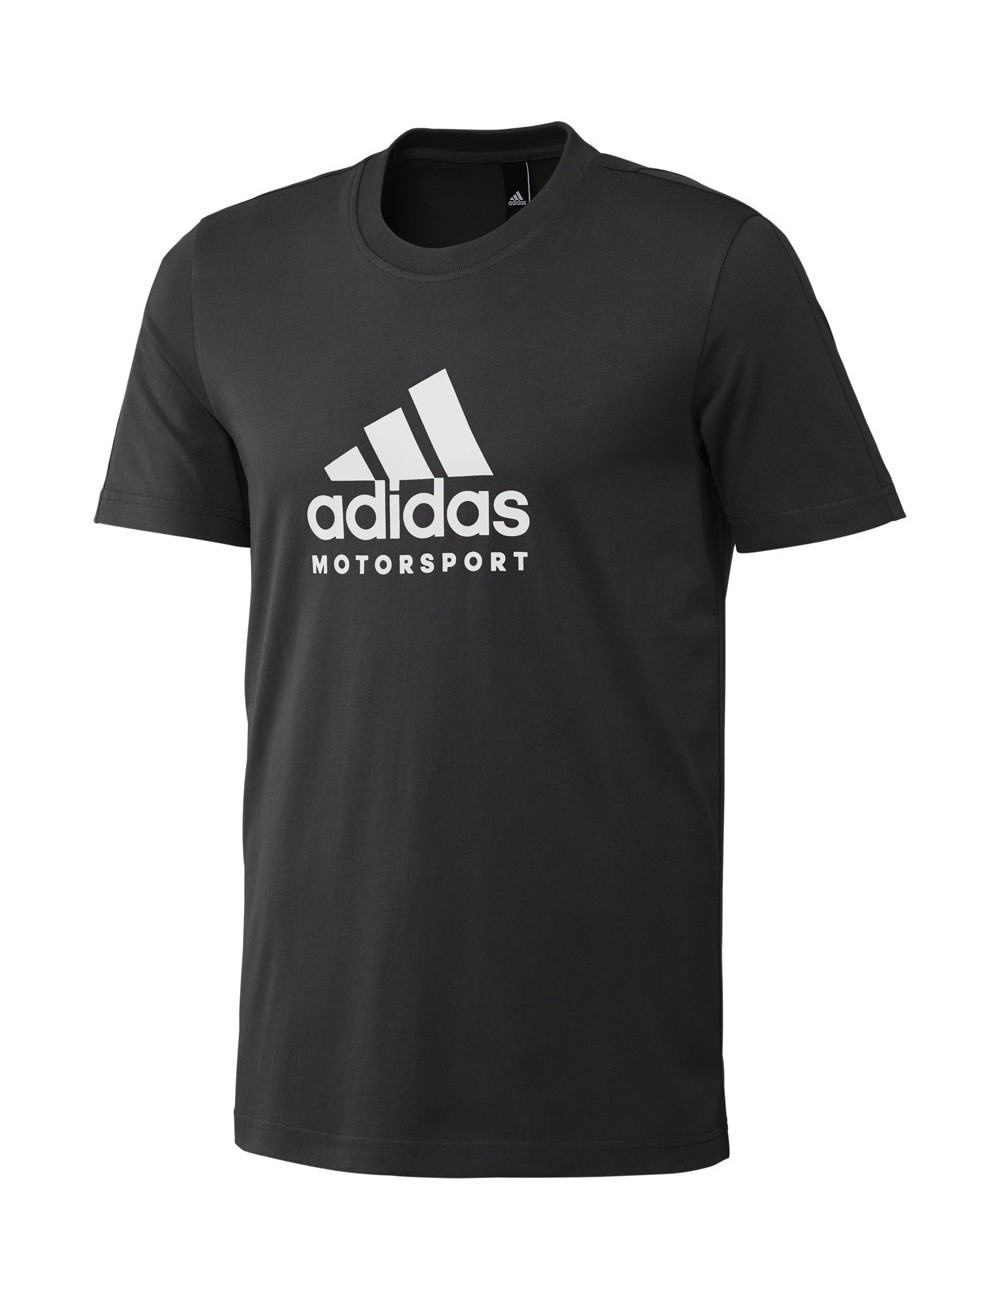 Adidas Motorsport T-shirt white / black